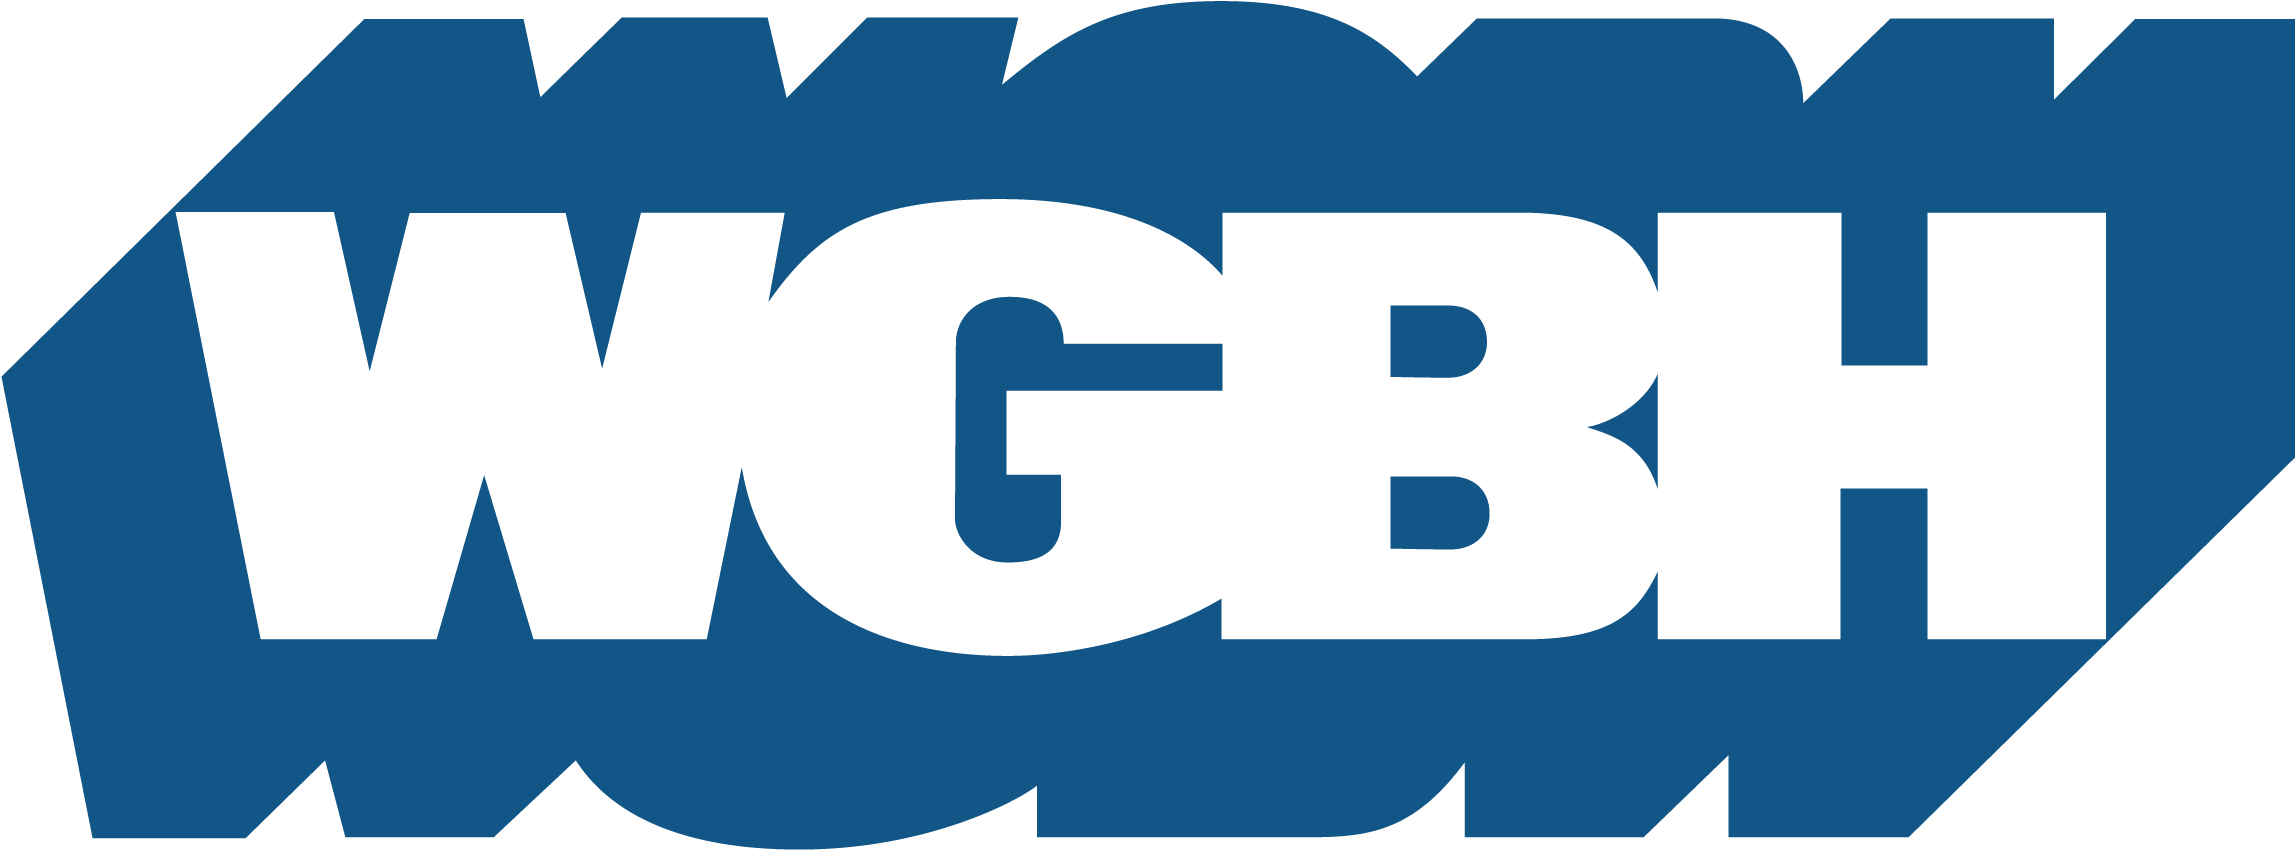 In Partnership With - Wgbh Boston Logo (3300x1982)